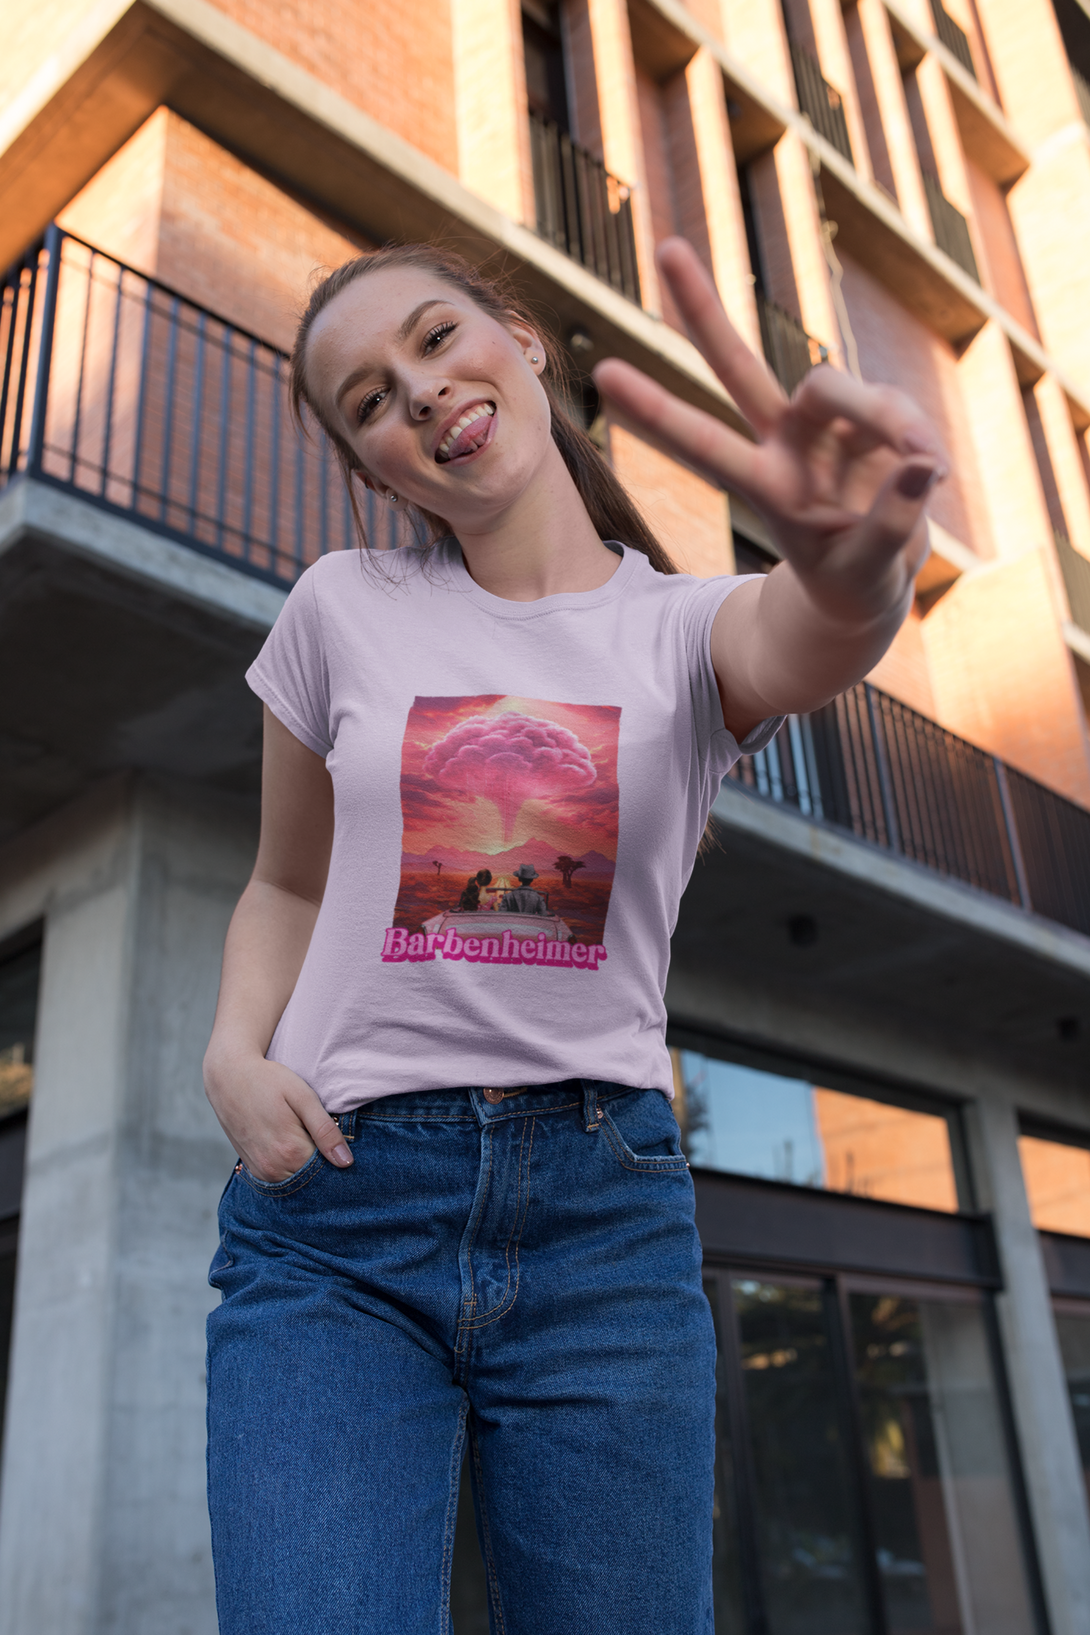 Barbienheimer Printed T-Shirt For Women - WowWaves - 4